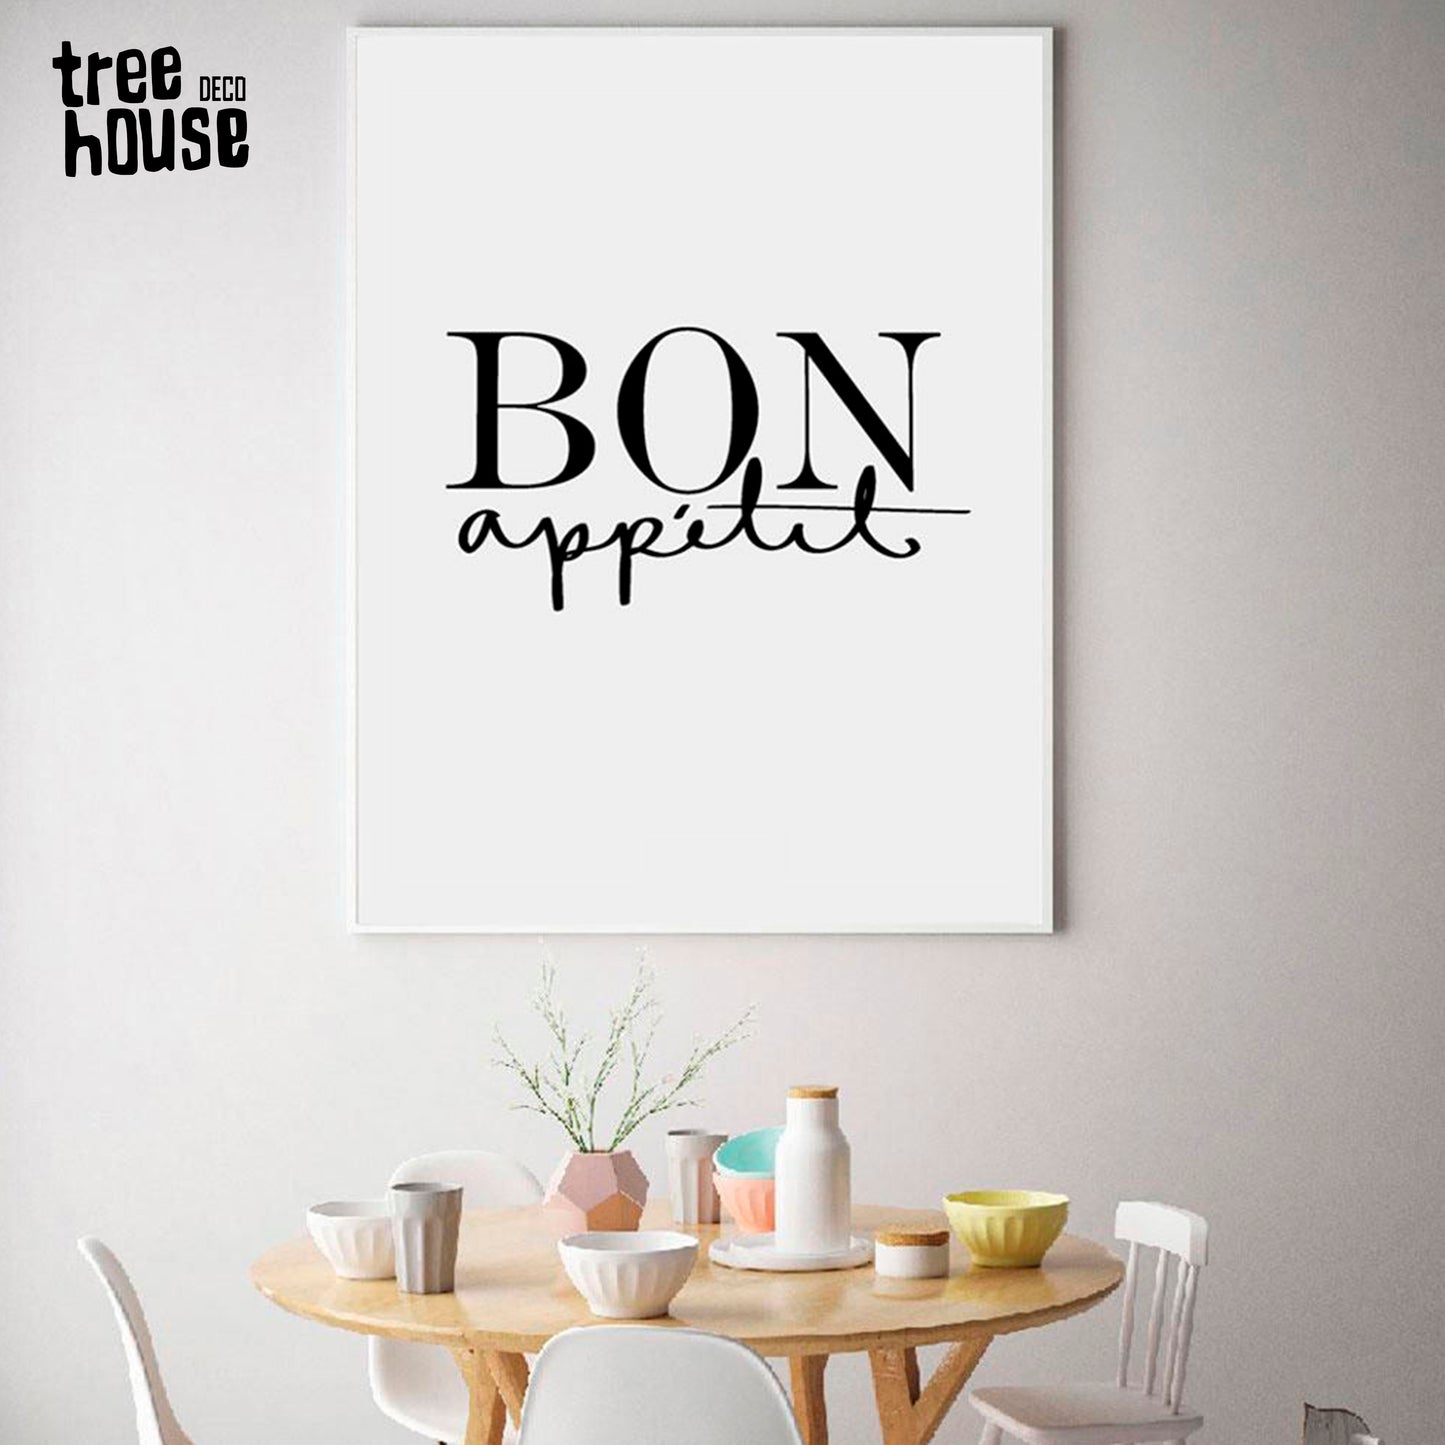 Cuadro Decorativo Frase , "BON apettit"